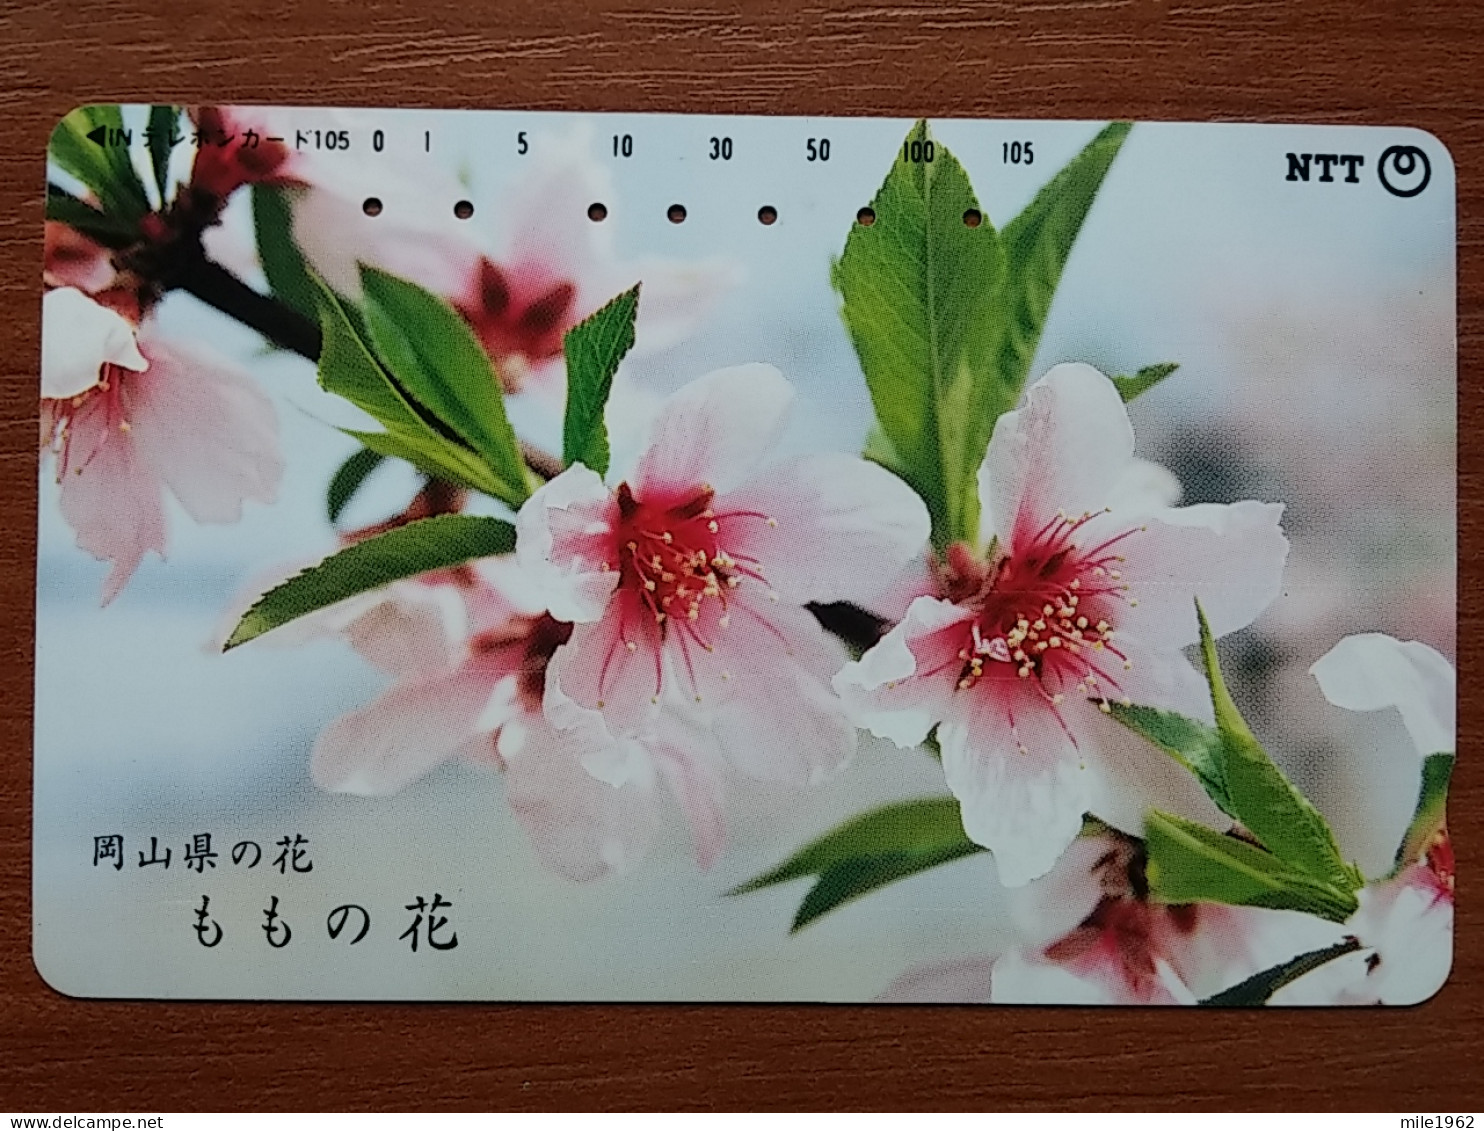 T-382 - JAPAN, Japon, Nipon, TELECARD, PHONECARD, Flower, Fleur, NTT 351-219 - Blumen